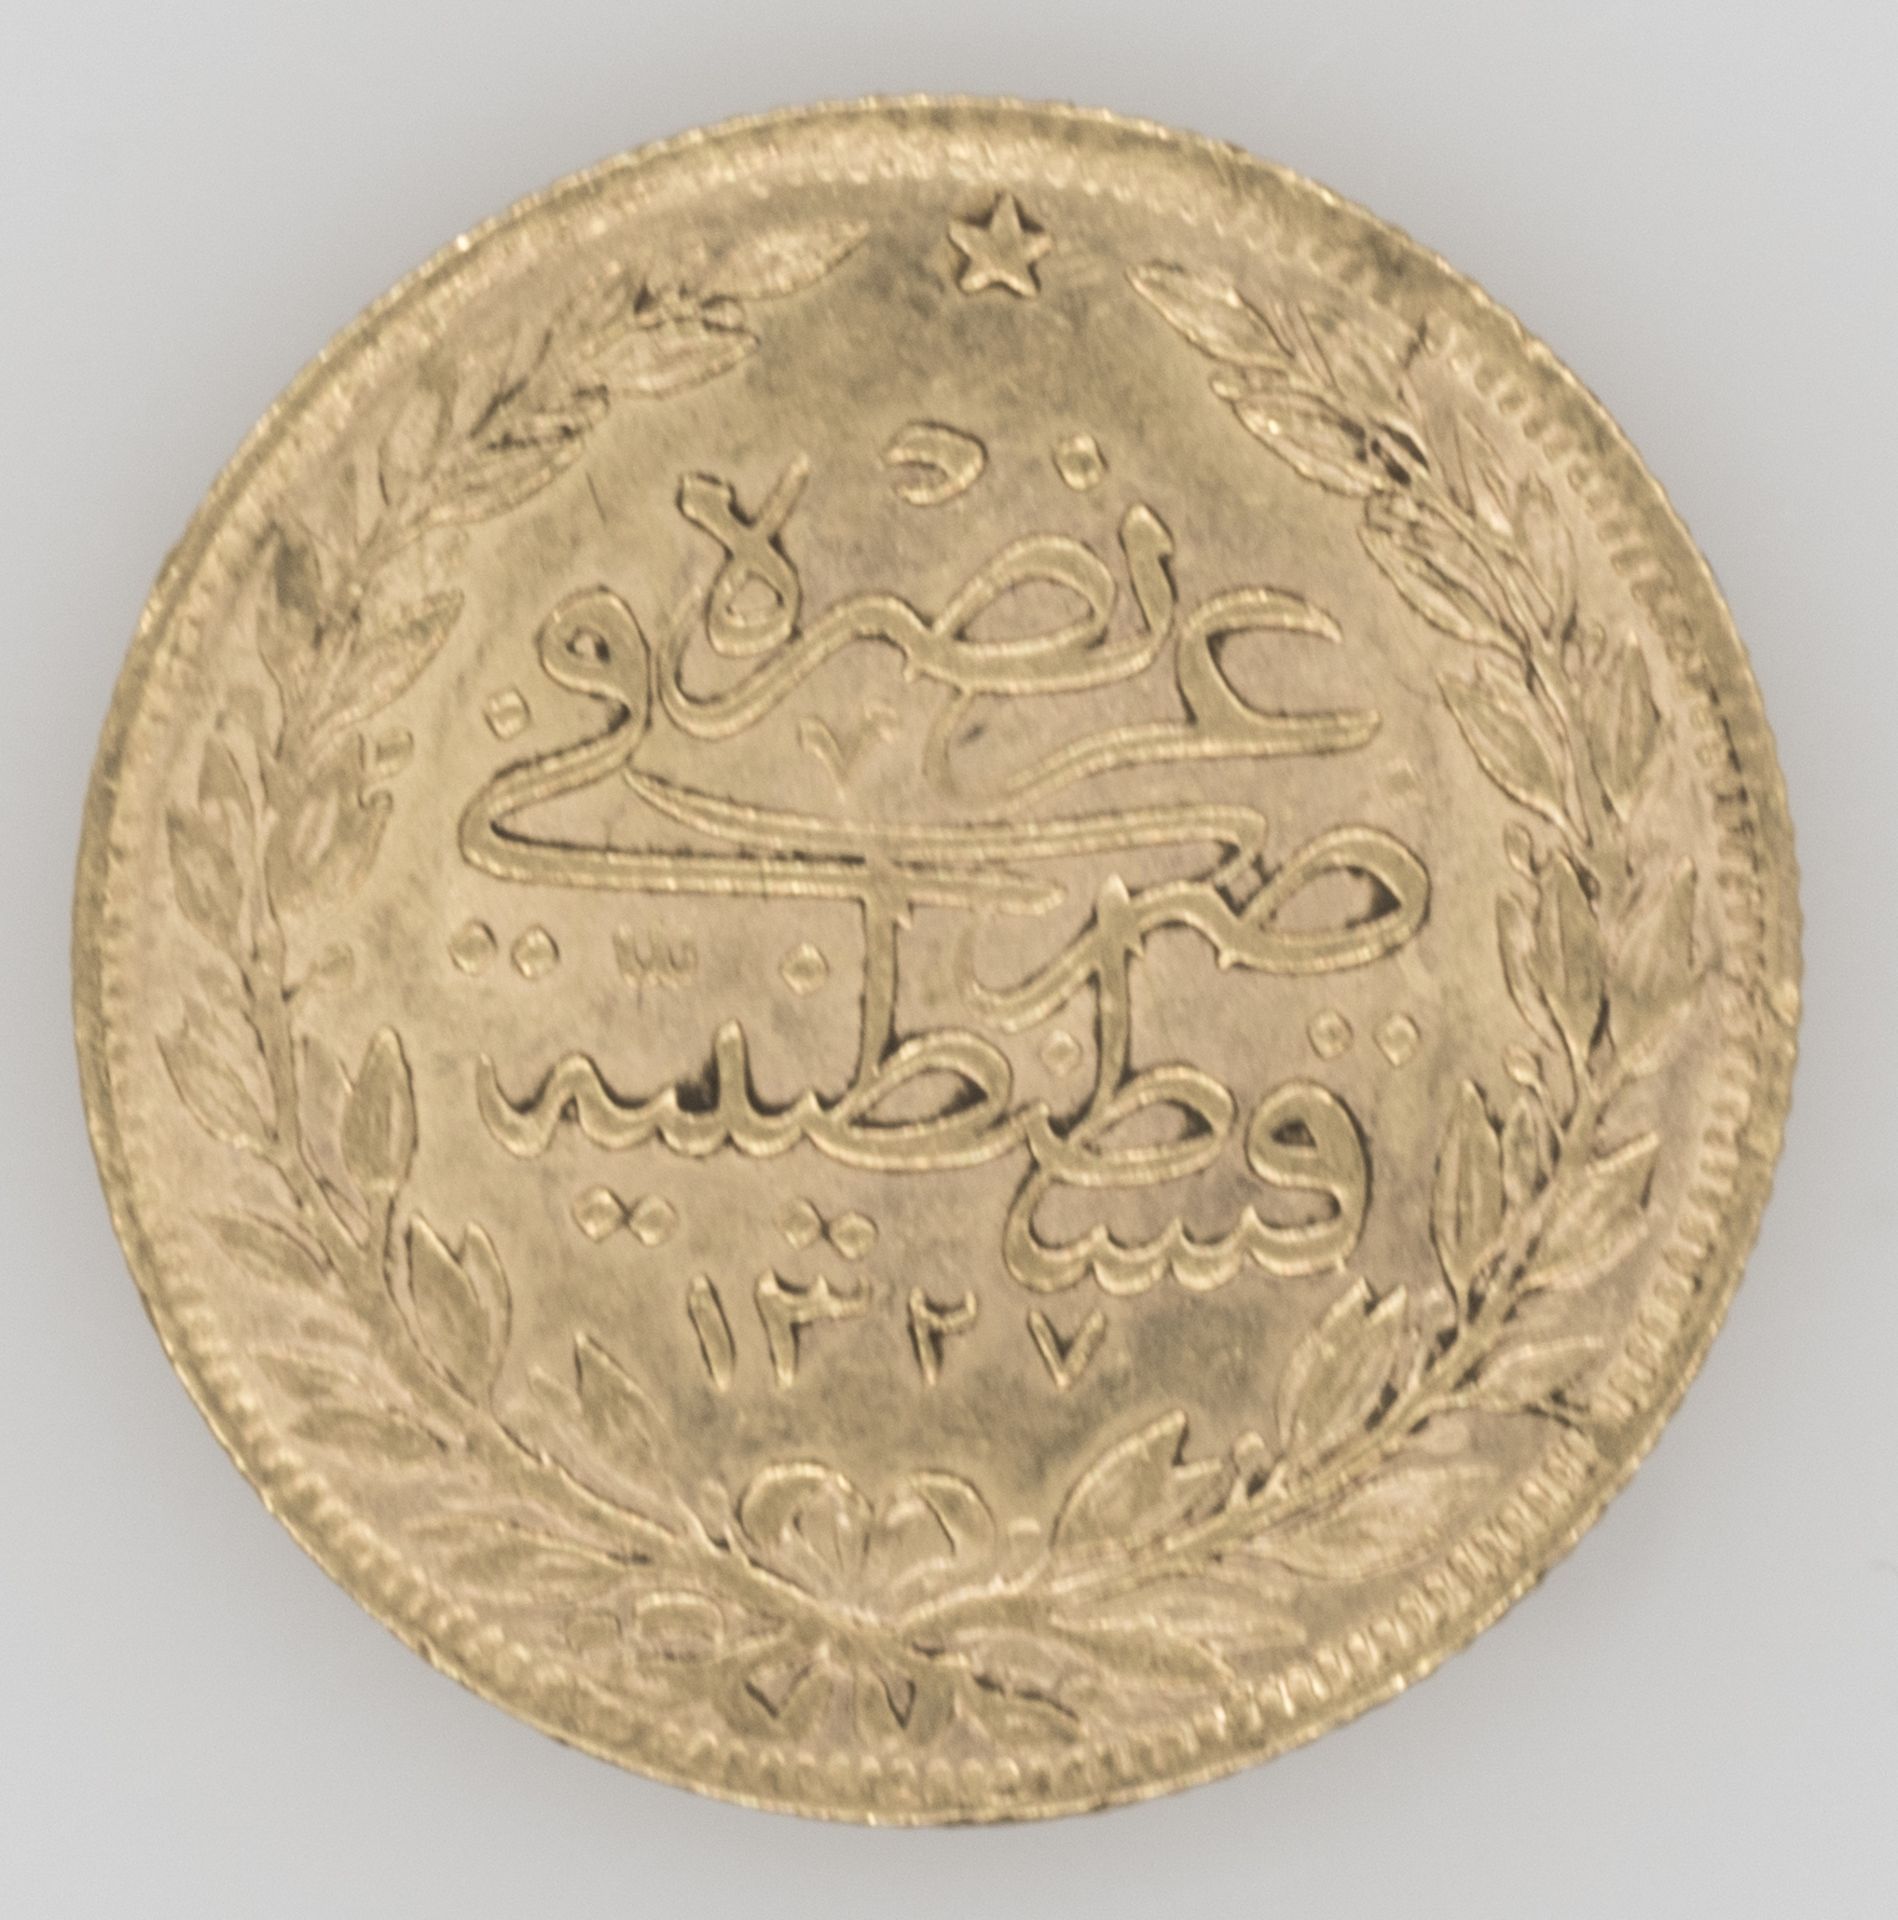 Türkei 1909 - 1918, 100 Piaster - Goldmünze "Sultan Mohammed V.". Gold 916/1000. Gewicht: ca. 7,34